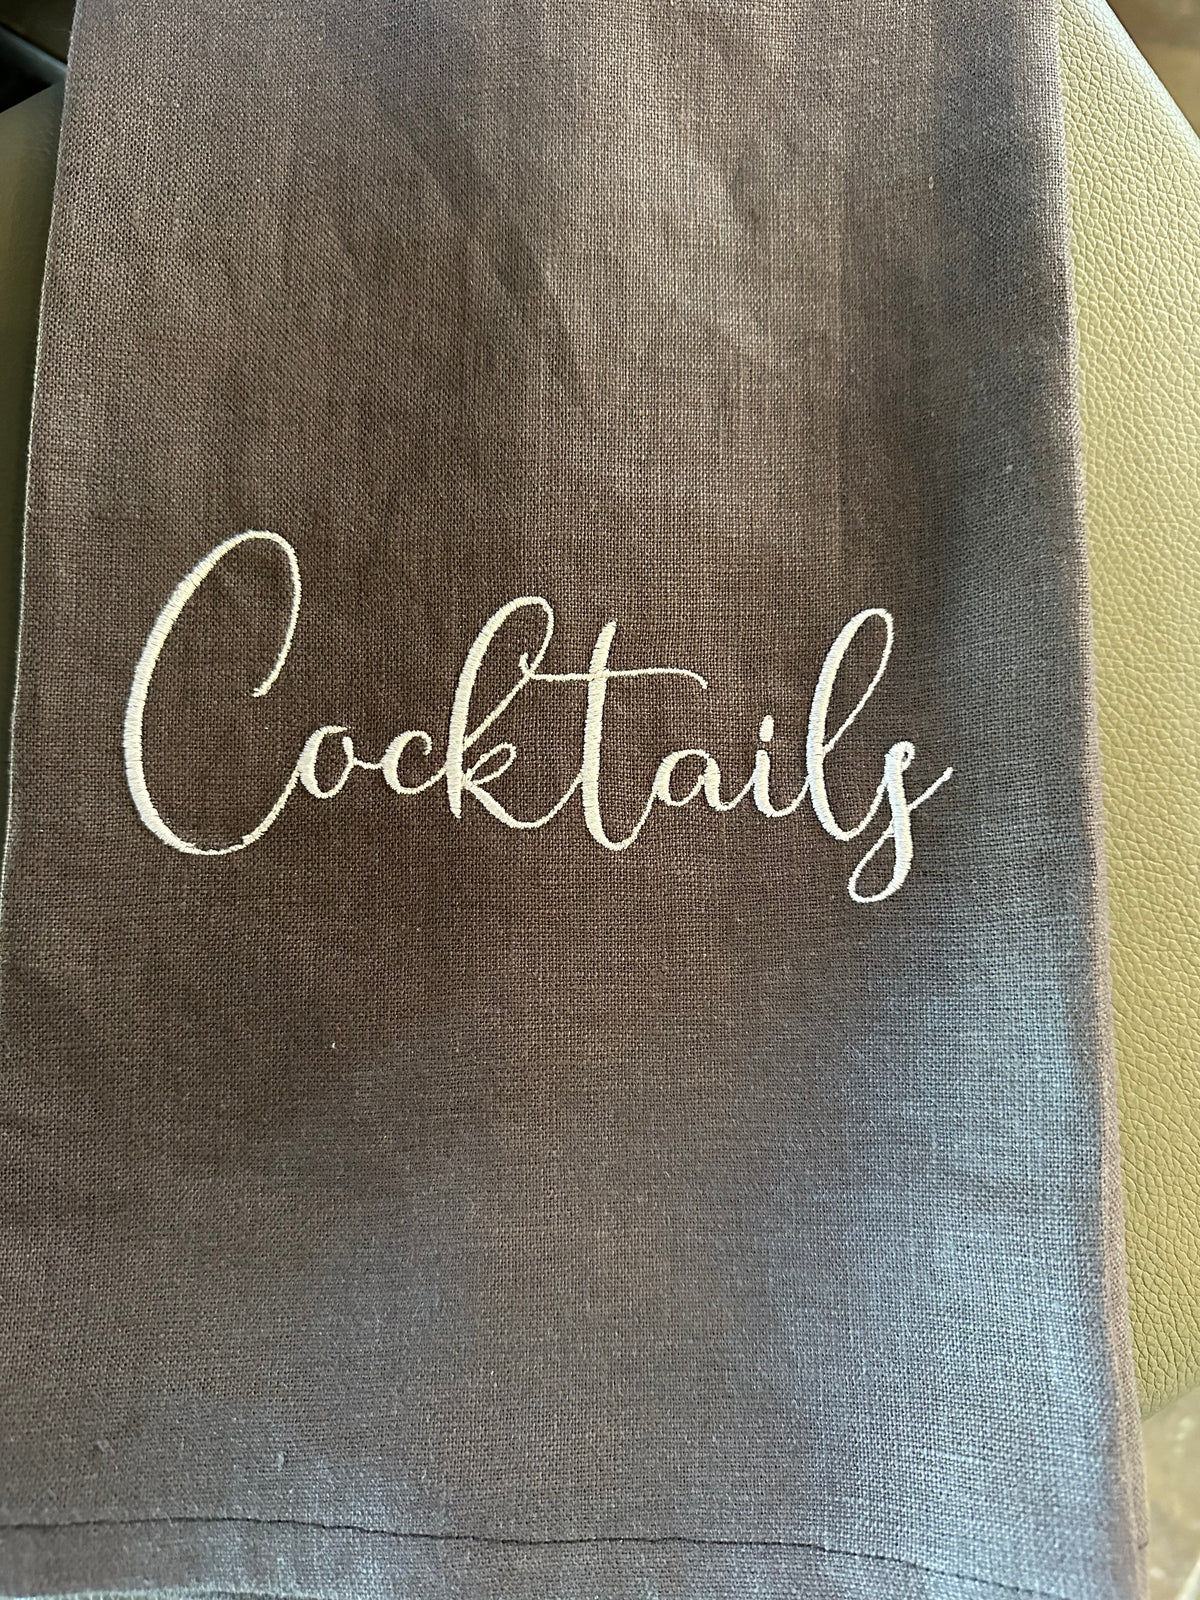 Cocktails Embroidered Linen Tea Towel